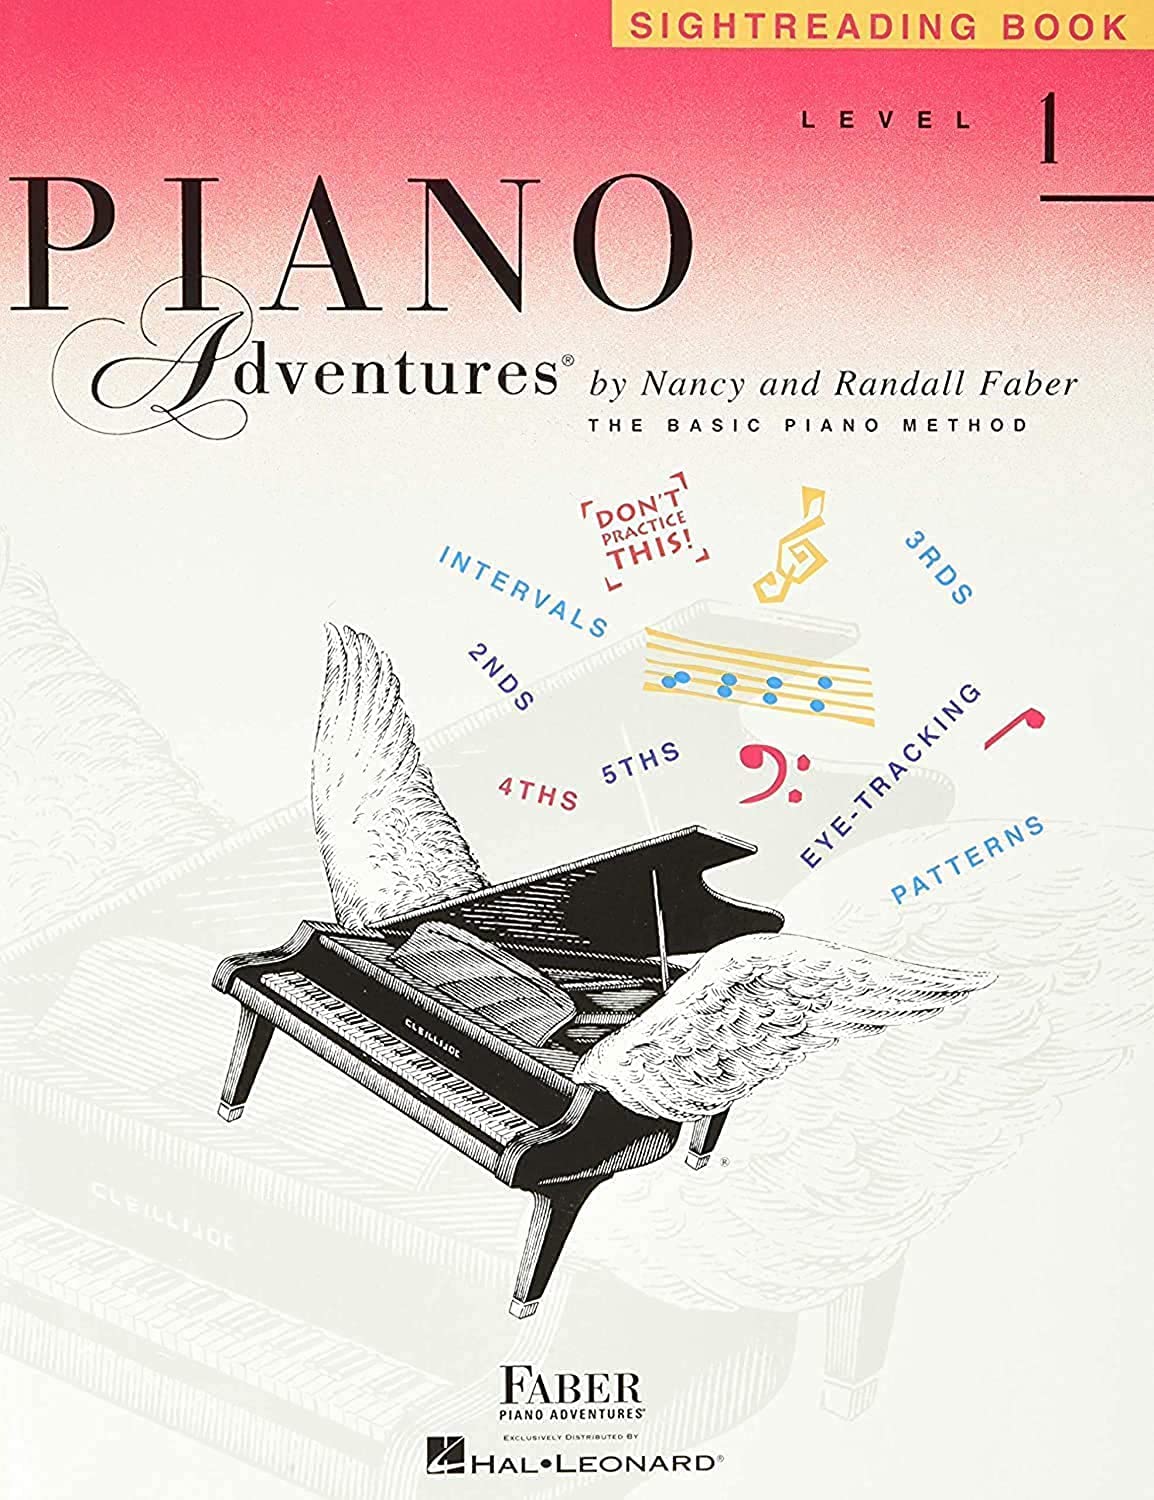 piano books for kids15